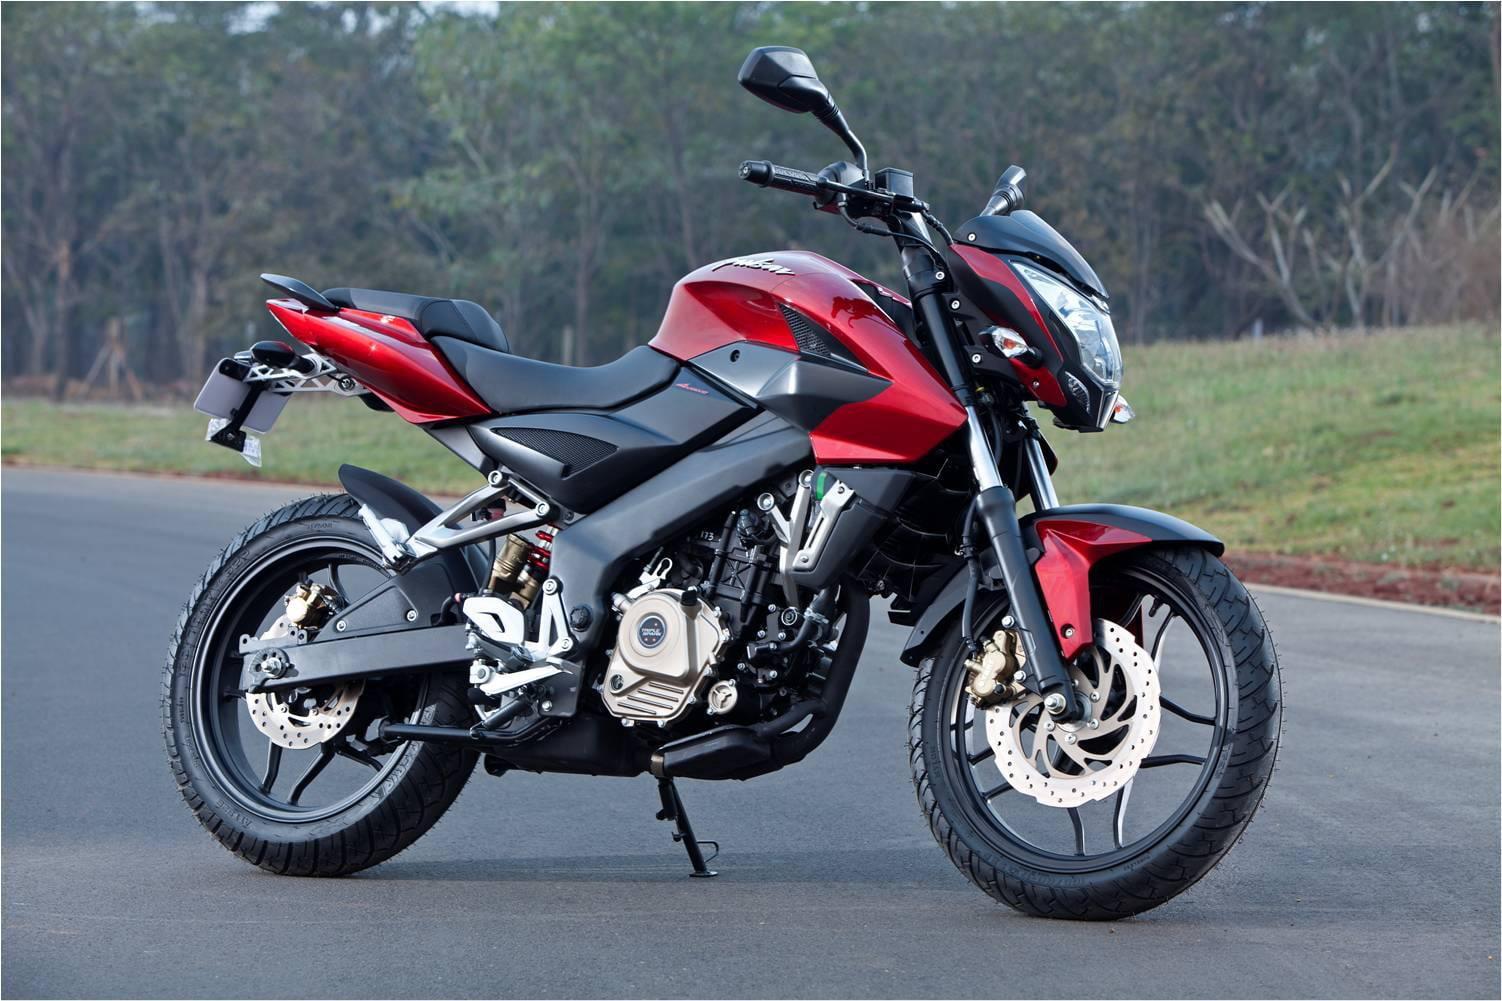 HD wallpaper: New Bajaj Pulsar 200NS, red and black naked sport bike